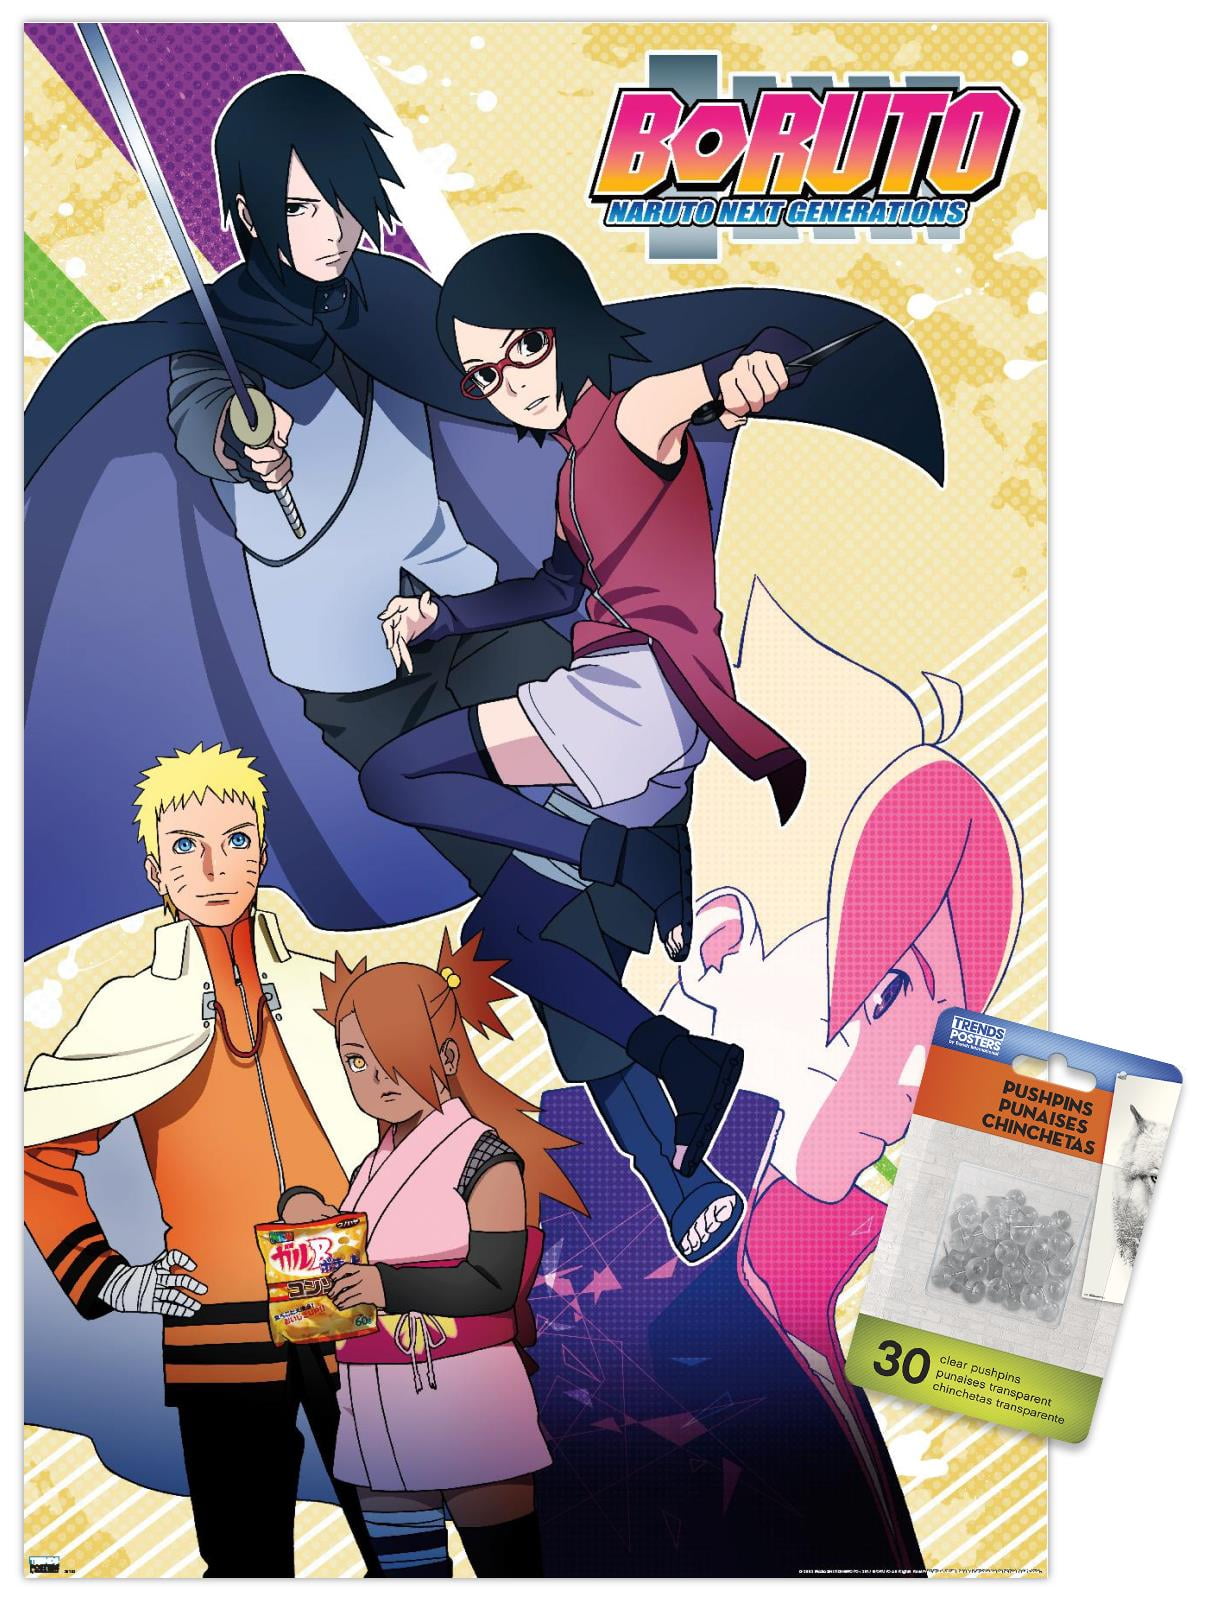 Naruto & Boruto Theme Park Pop-up Shop Merchandise Available Online